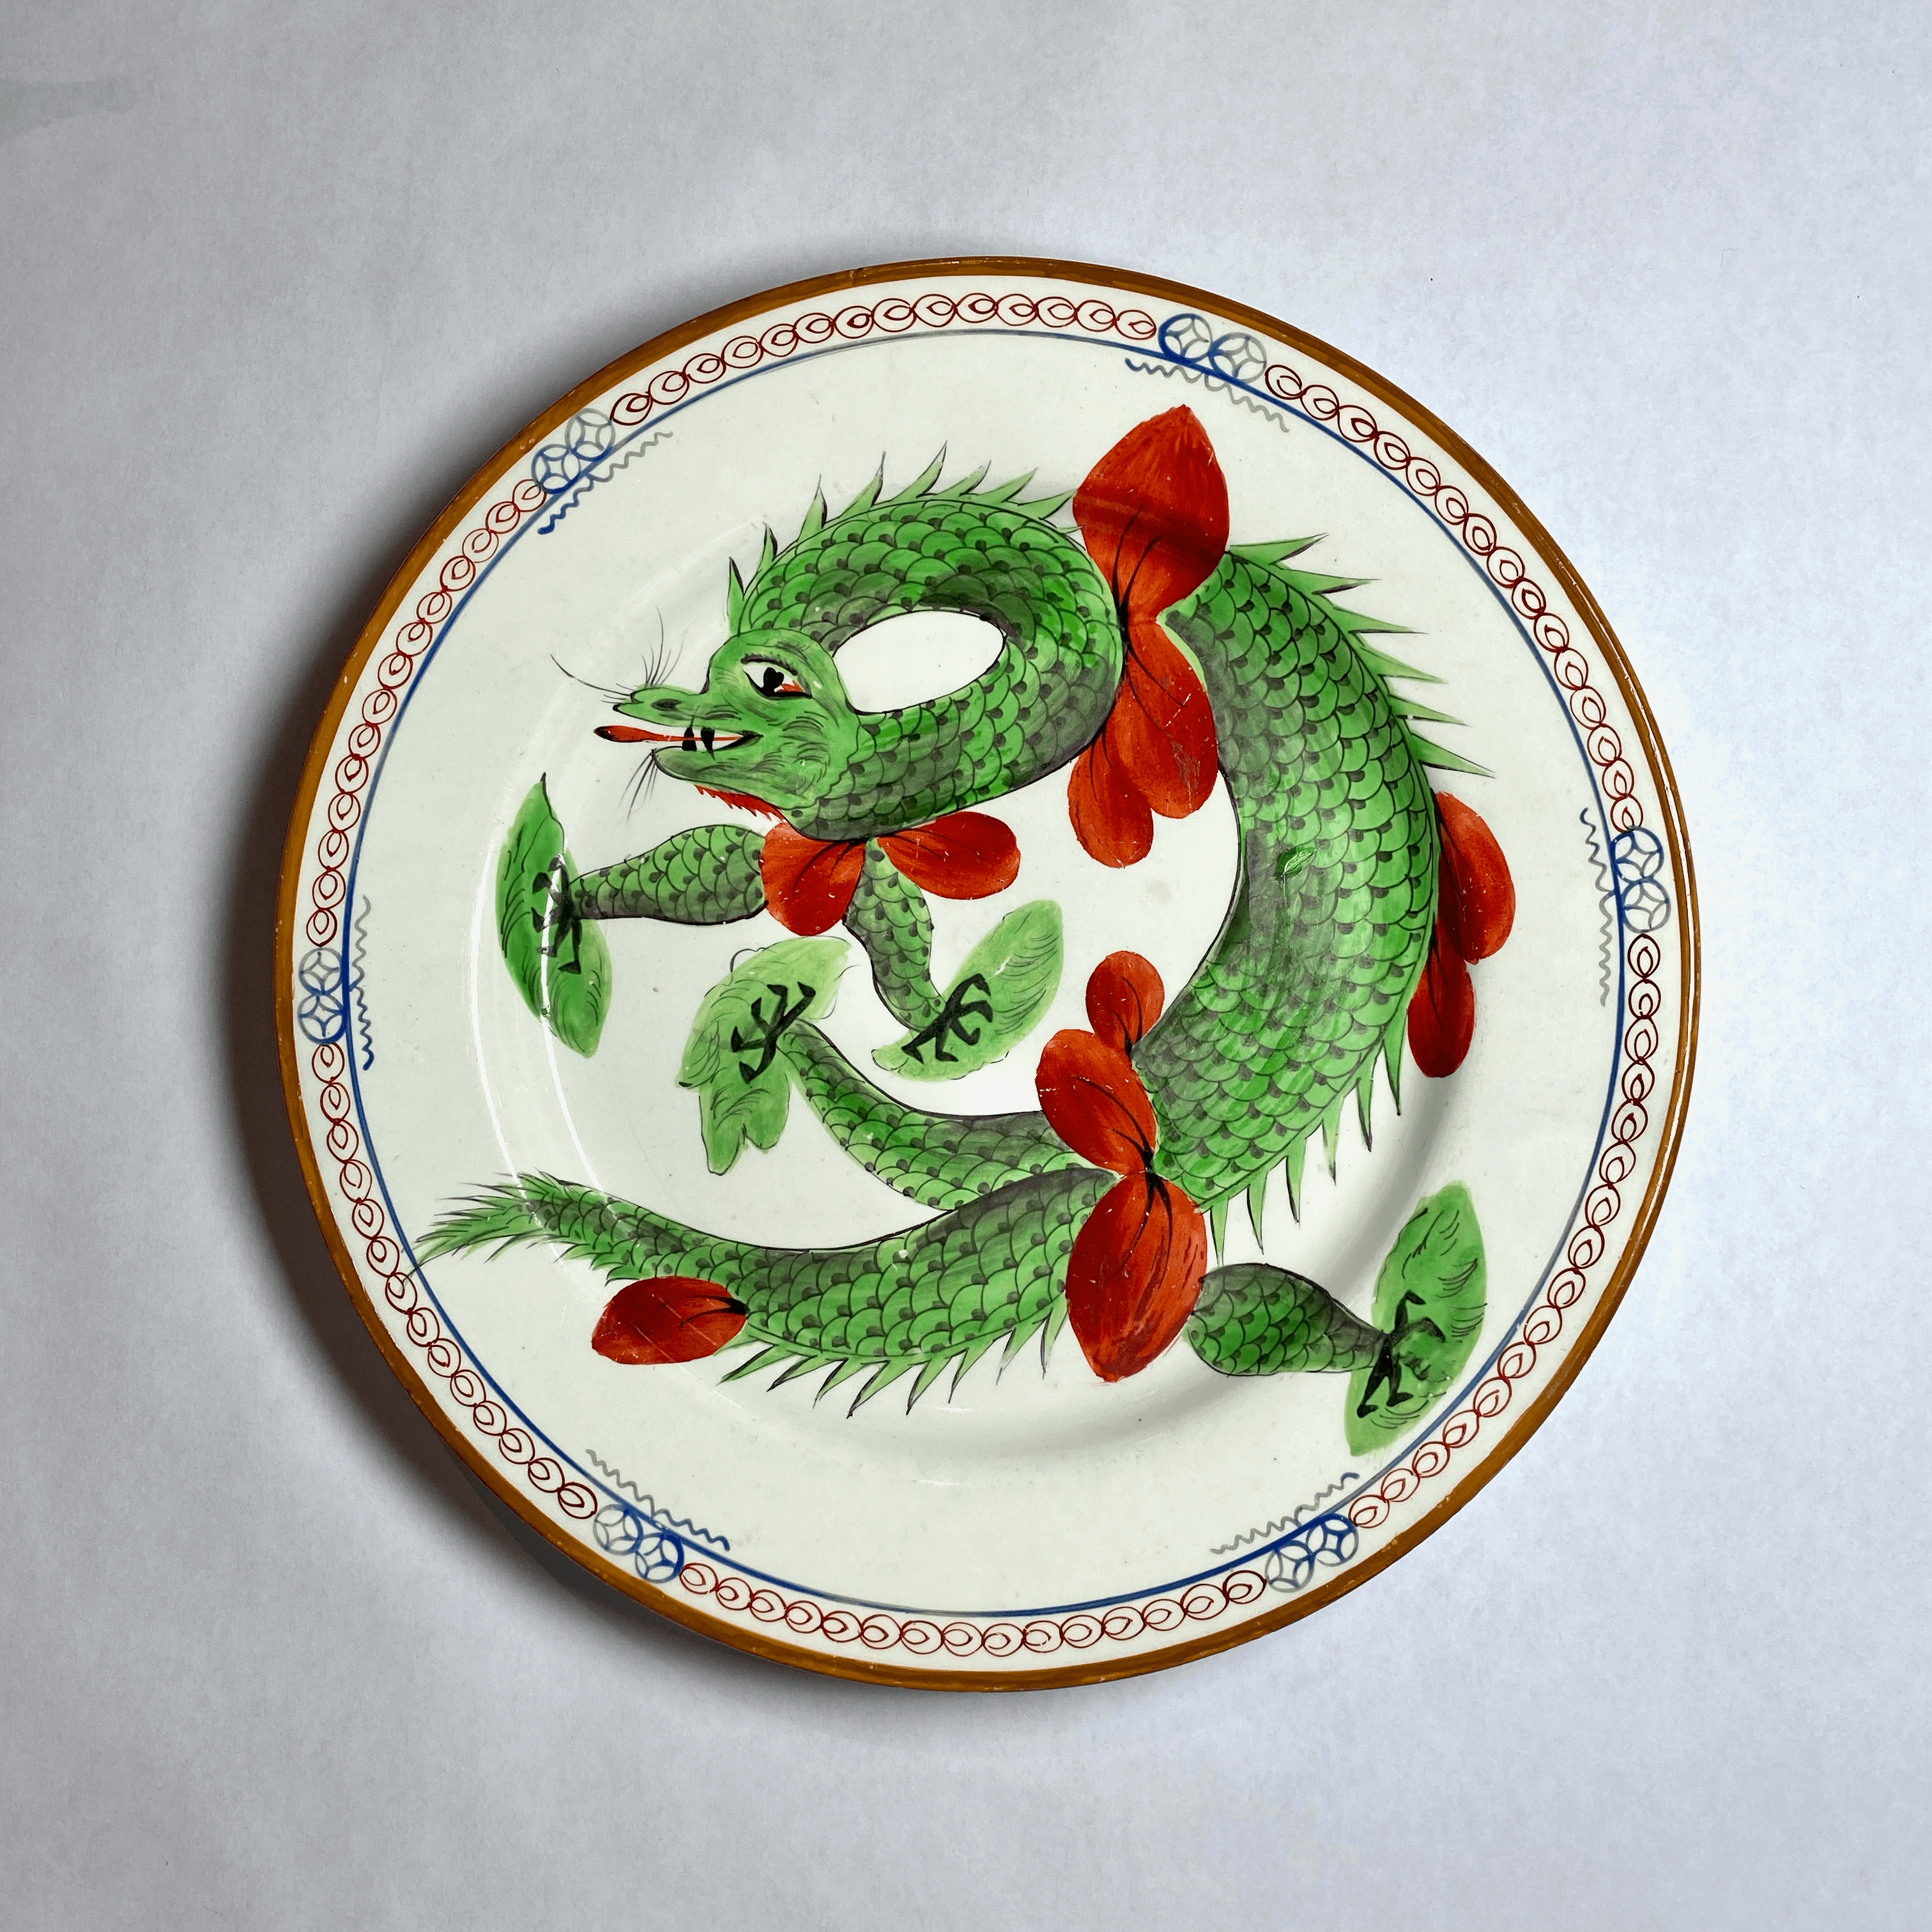 Hand-painted Flight & Barr Dragon Plates c. 1792-1807